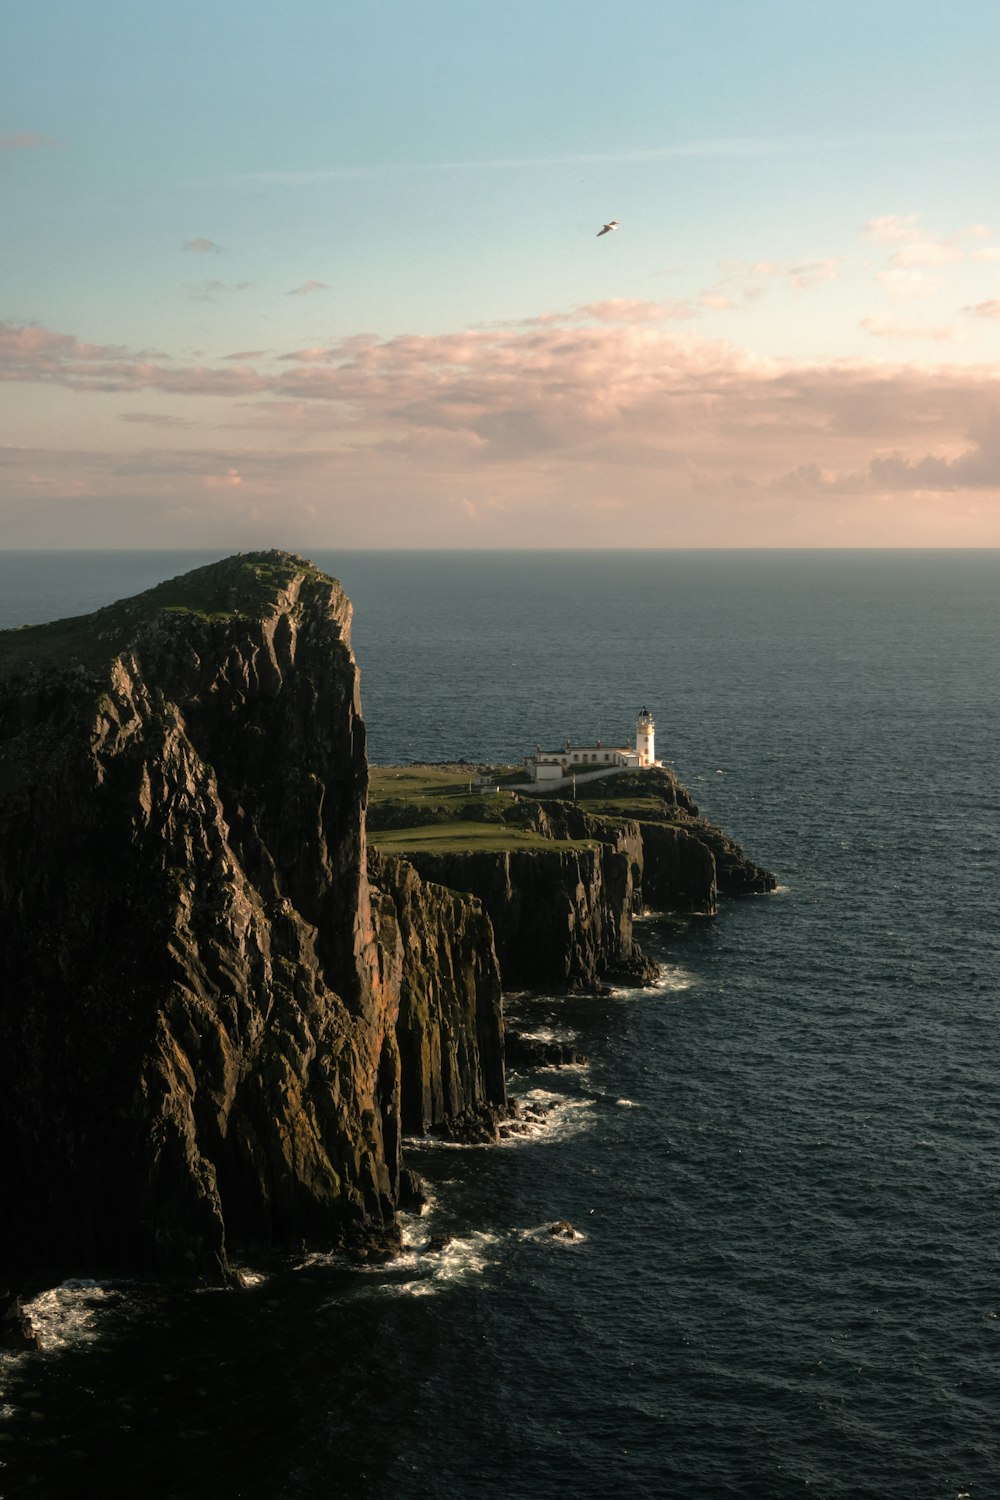 a lighthouse on a cliff